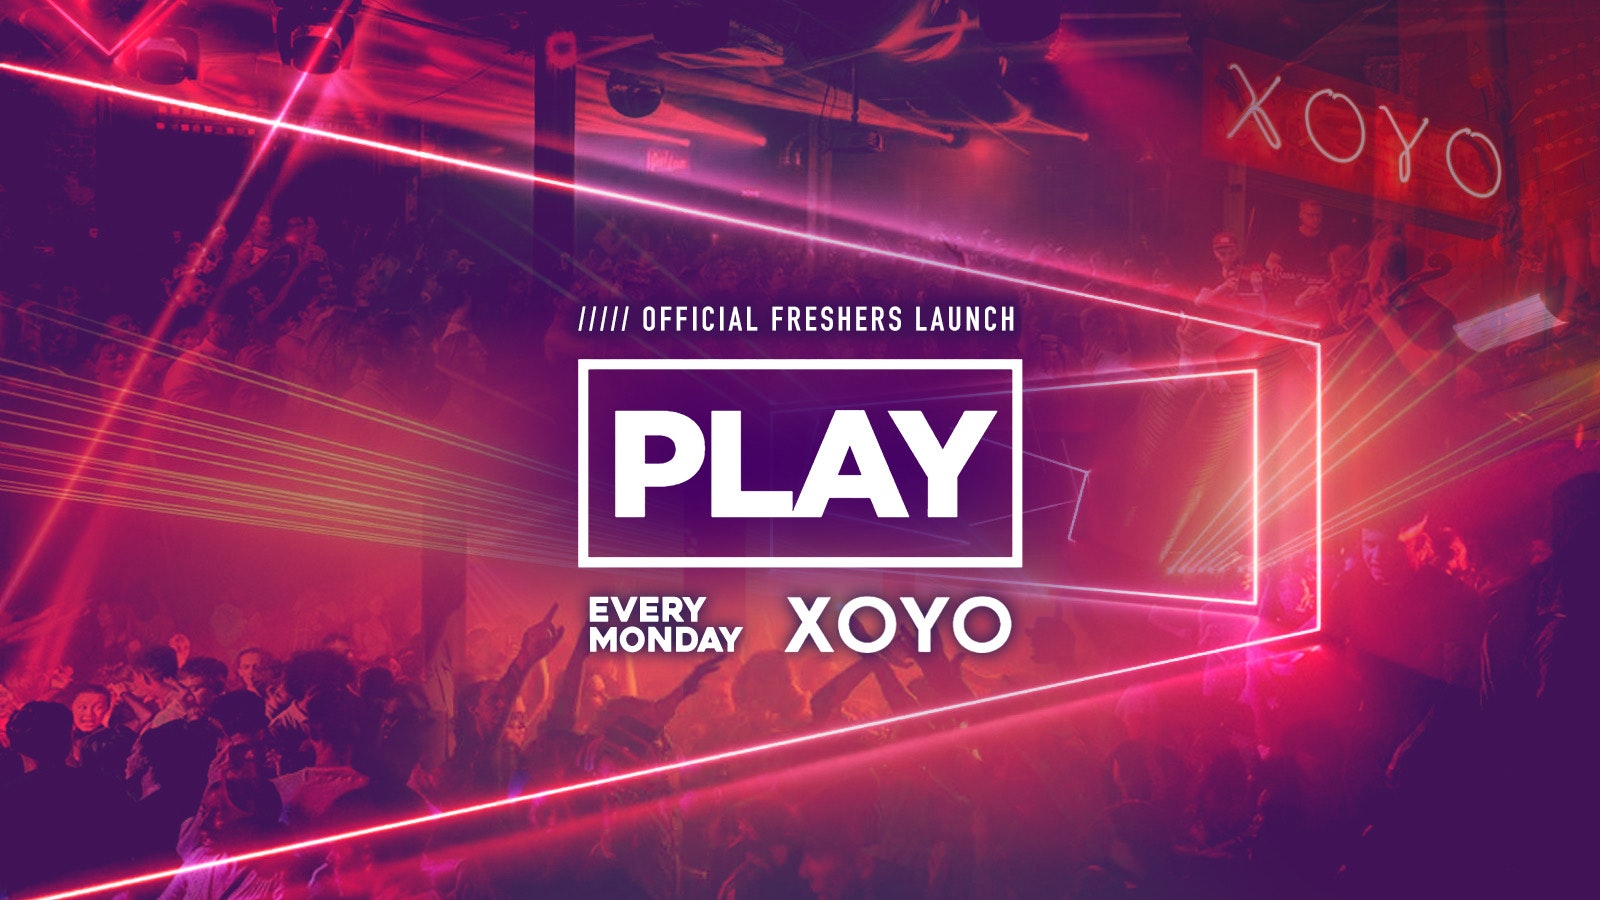 PLAY LONDON – FRESHERS LAUNCH PART 2 // XOYO – Every Monday